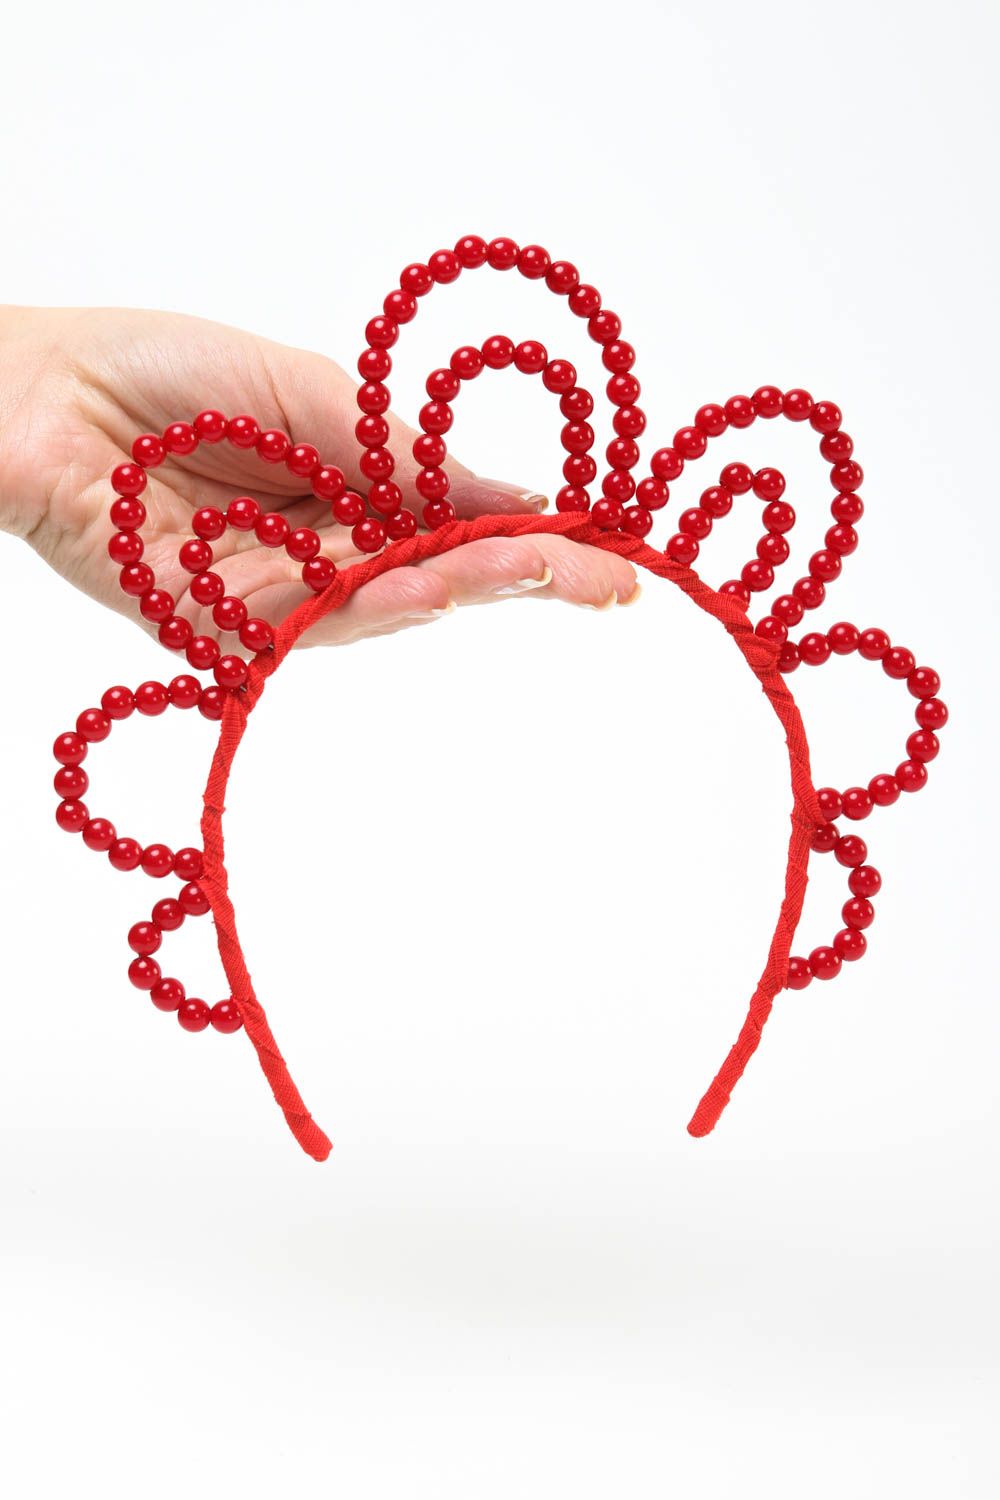 Handmade Kopf Schmuck Haar Accessoire Geschenk für Mädchen Haar Reif rot schön foto 5